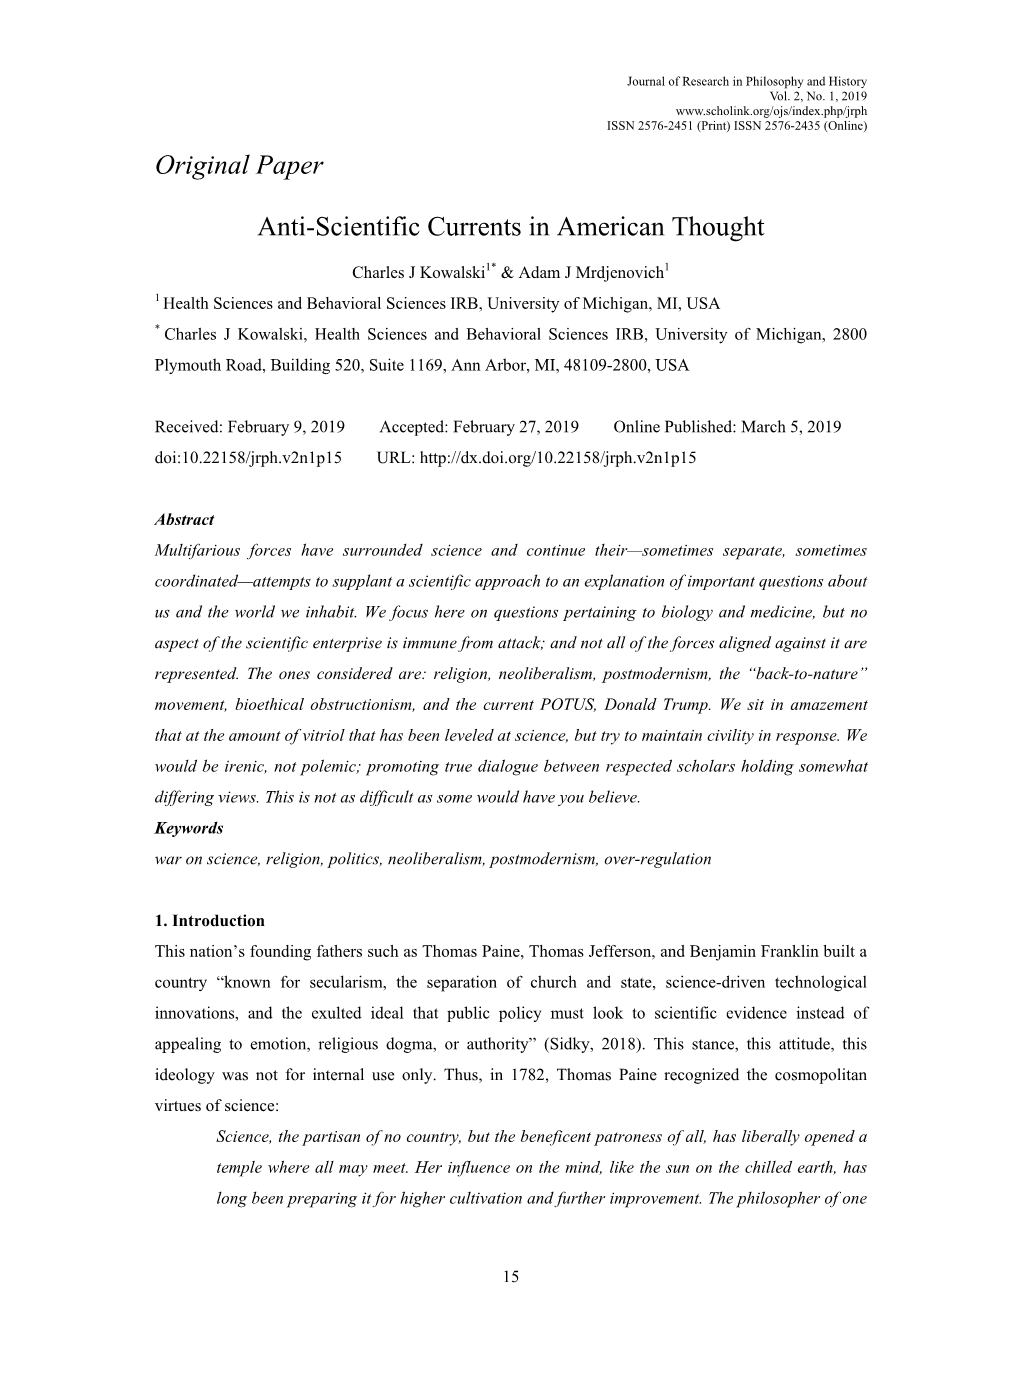 Original Paper Anti-Scientific Currents in American Thought